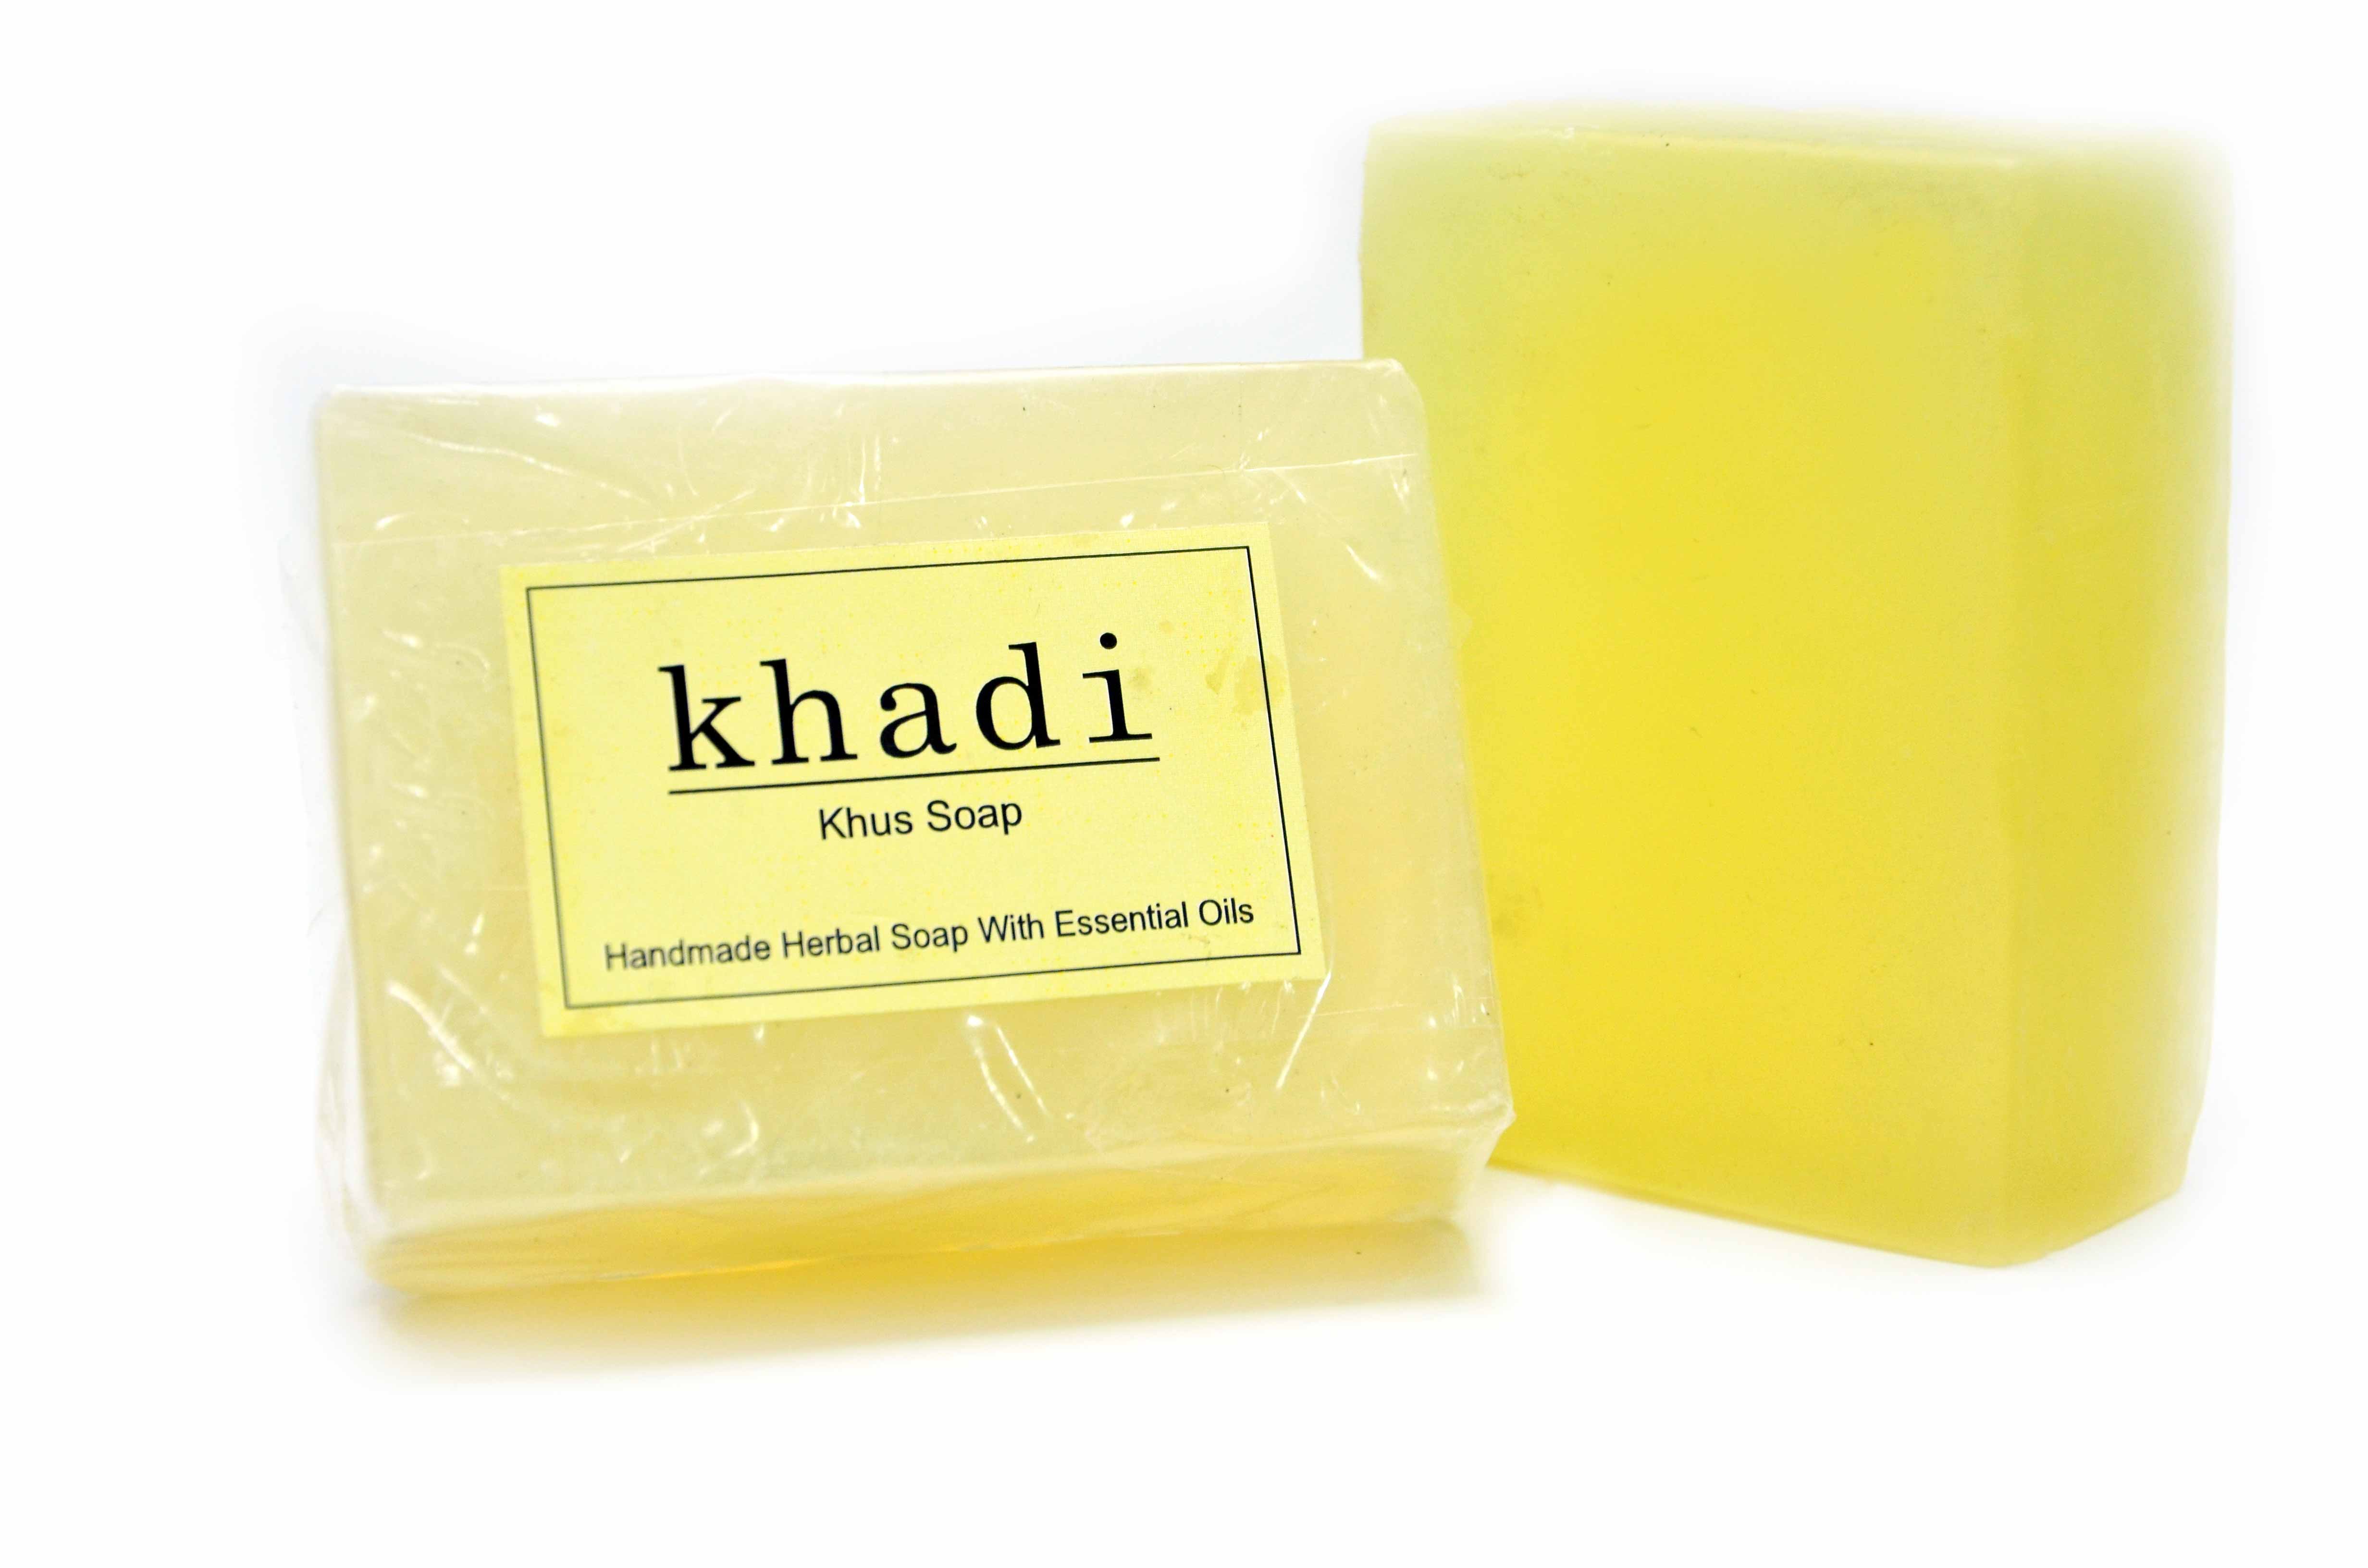 Buy Vagad's Khadi Khus Soap at Best Price Online